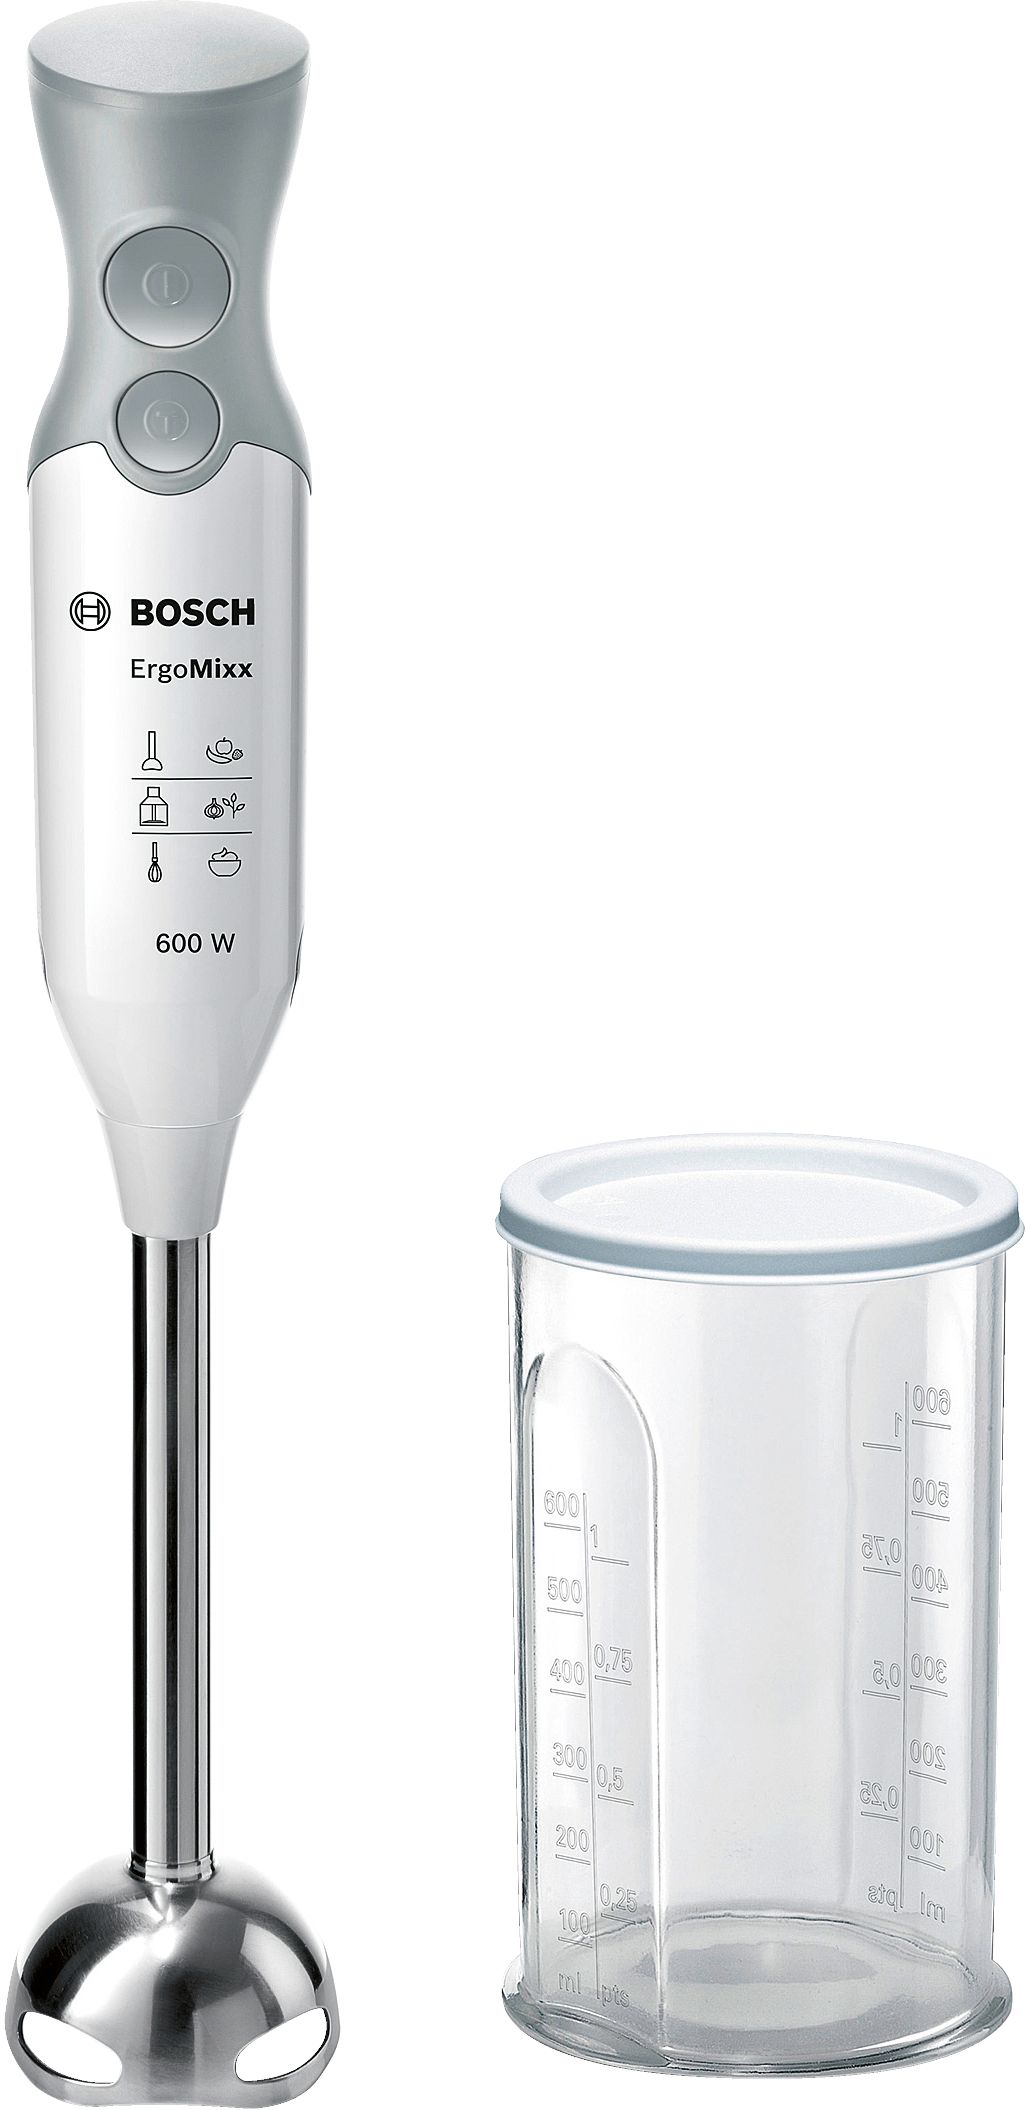 Bosch Batidora de mano ErgoMixx 600 W Blanco, MSM66110